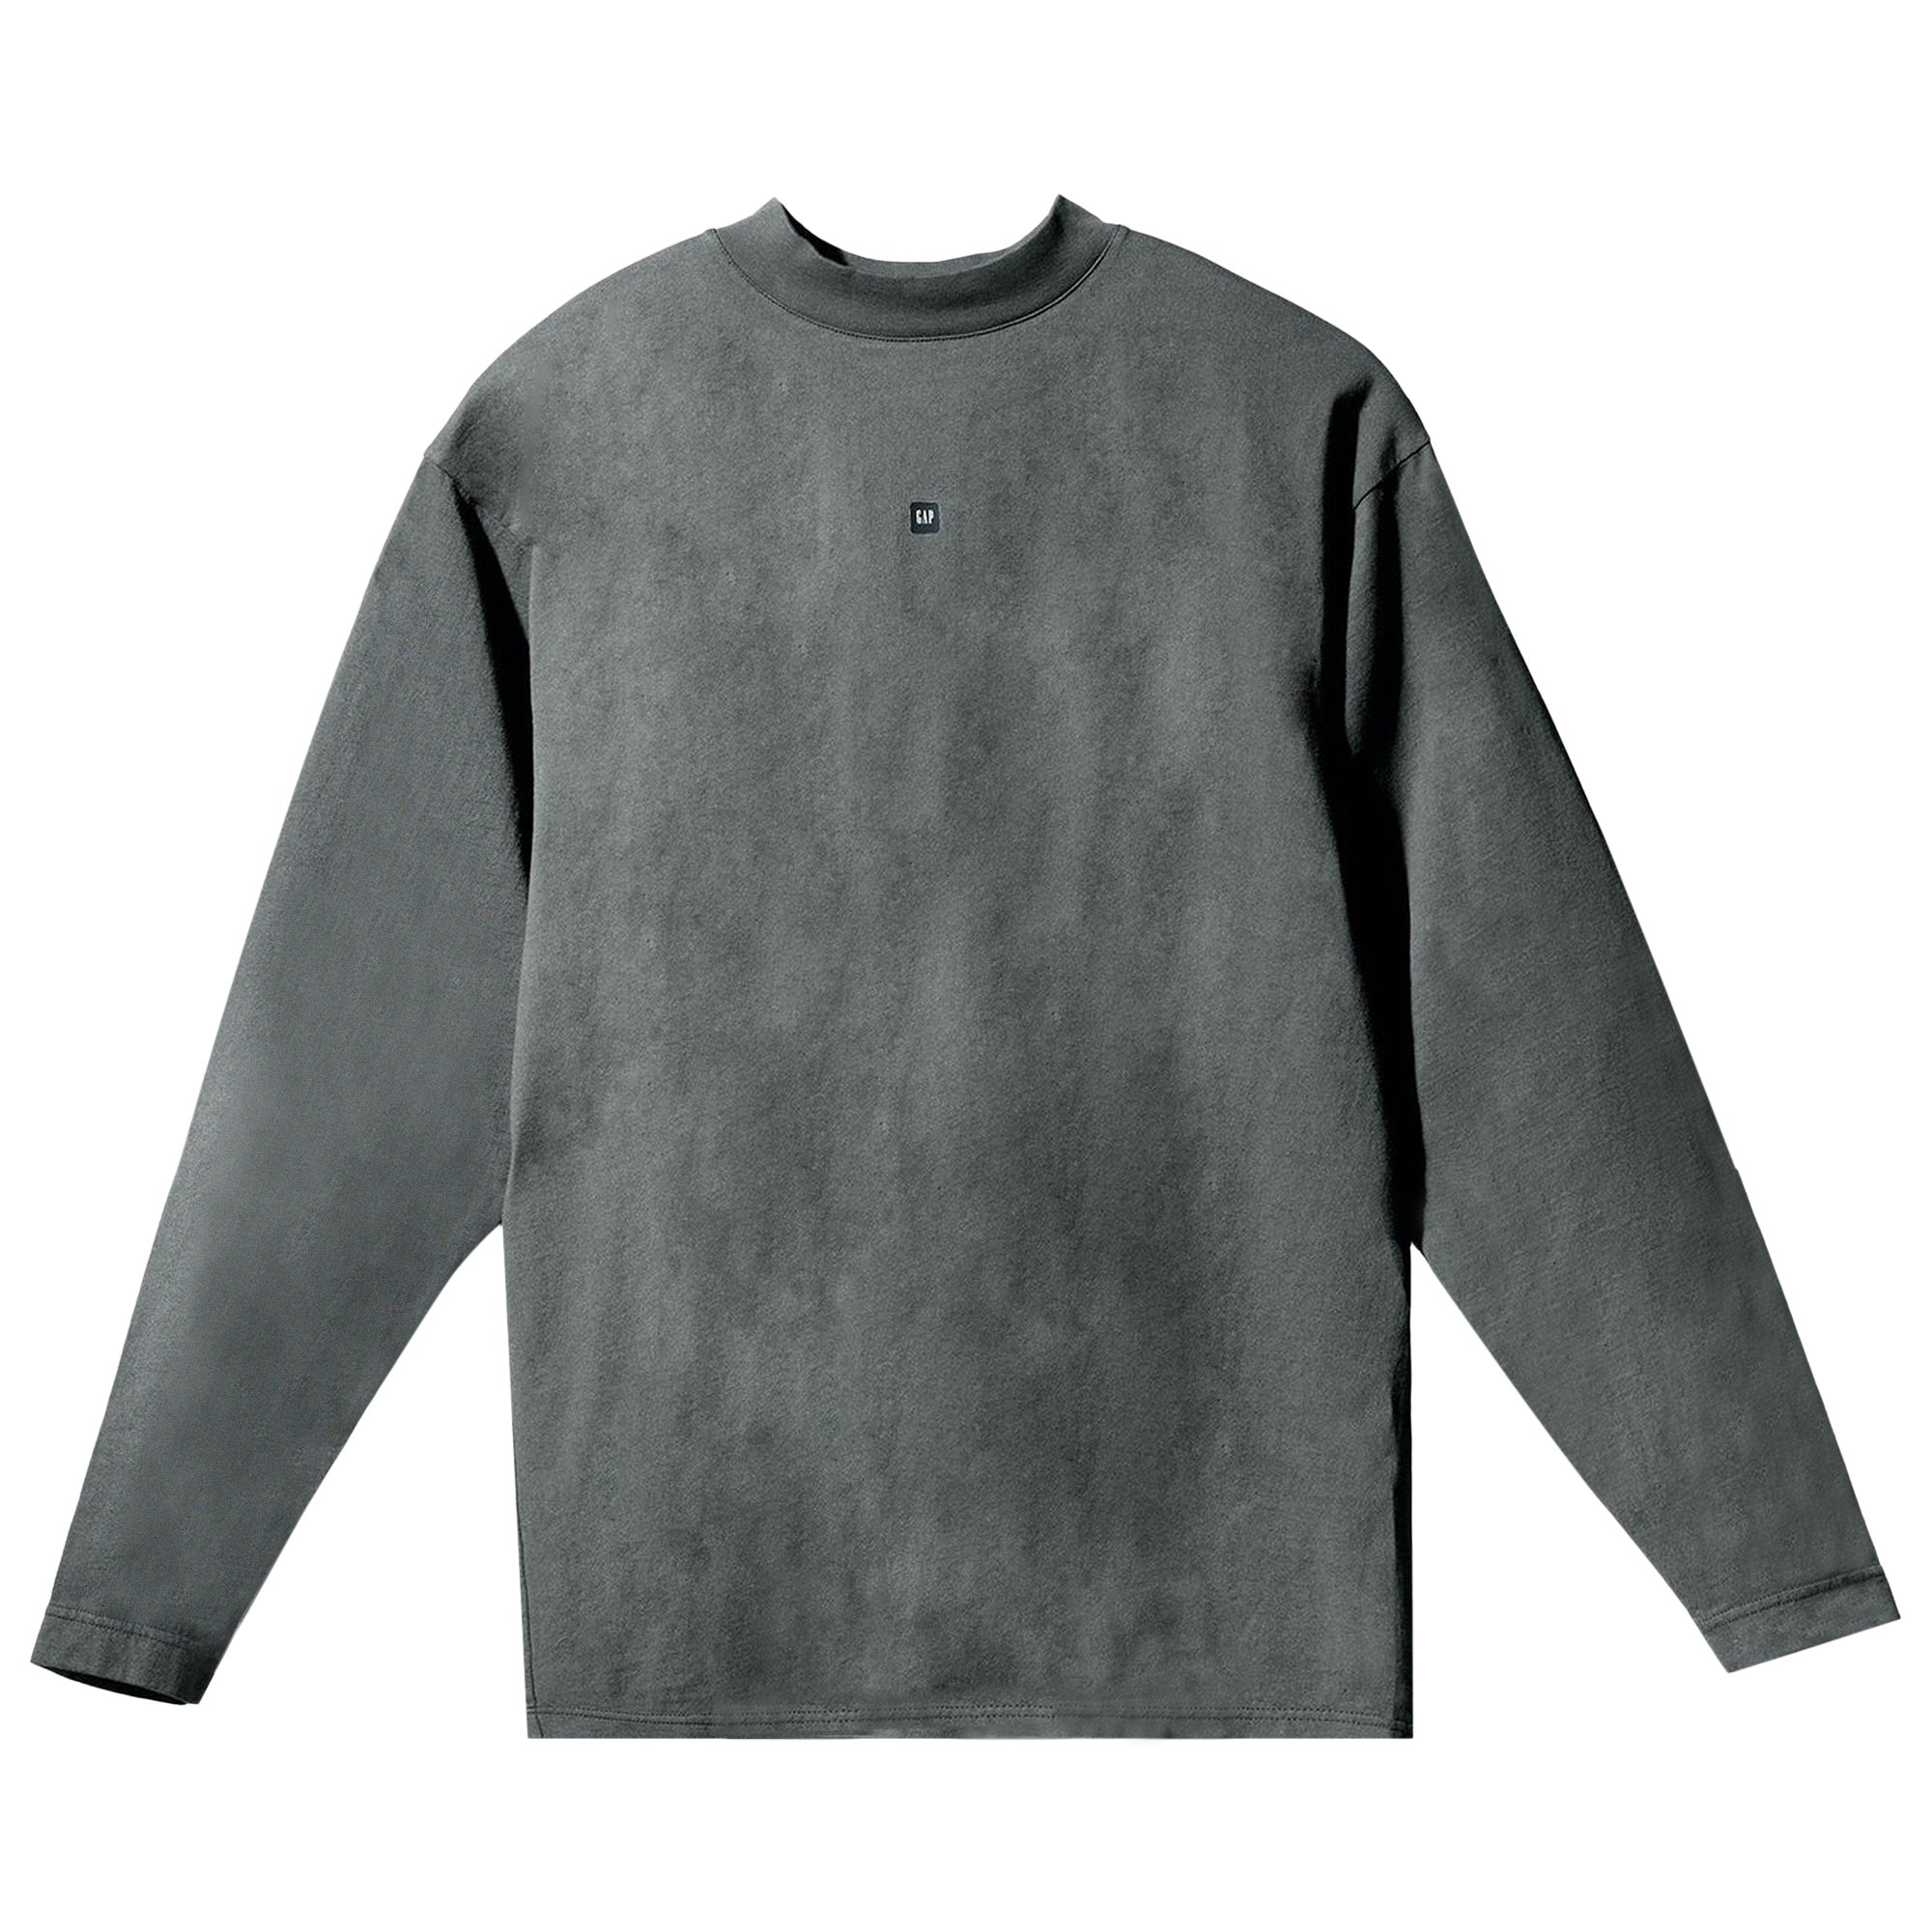 Yeezy x Gap Long Sleeve T-shirt Dark Grey